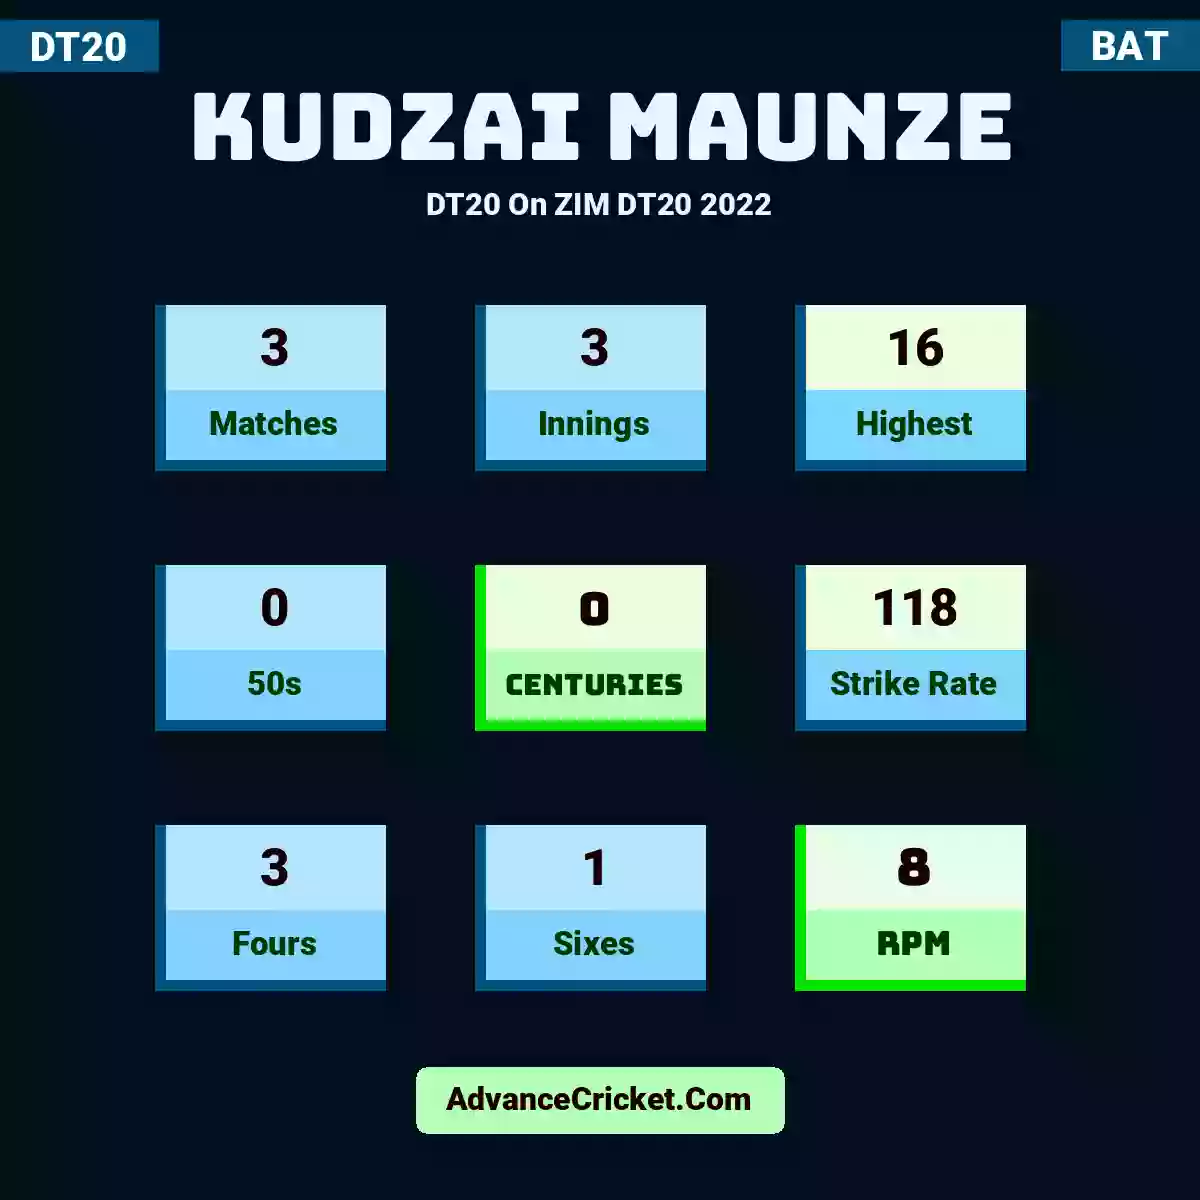 Kudzai Maunze DT20  On ZIM DT20 2022, Kudzai Maunze played 3 matches, scored 16 runs as highest, 0 half-centuries, and 0 centuries, with a strike rate of 118. K.Maunze hit 3 fours and 1 sixes, with an RPM of 8.